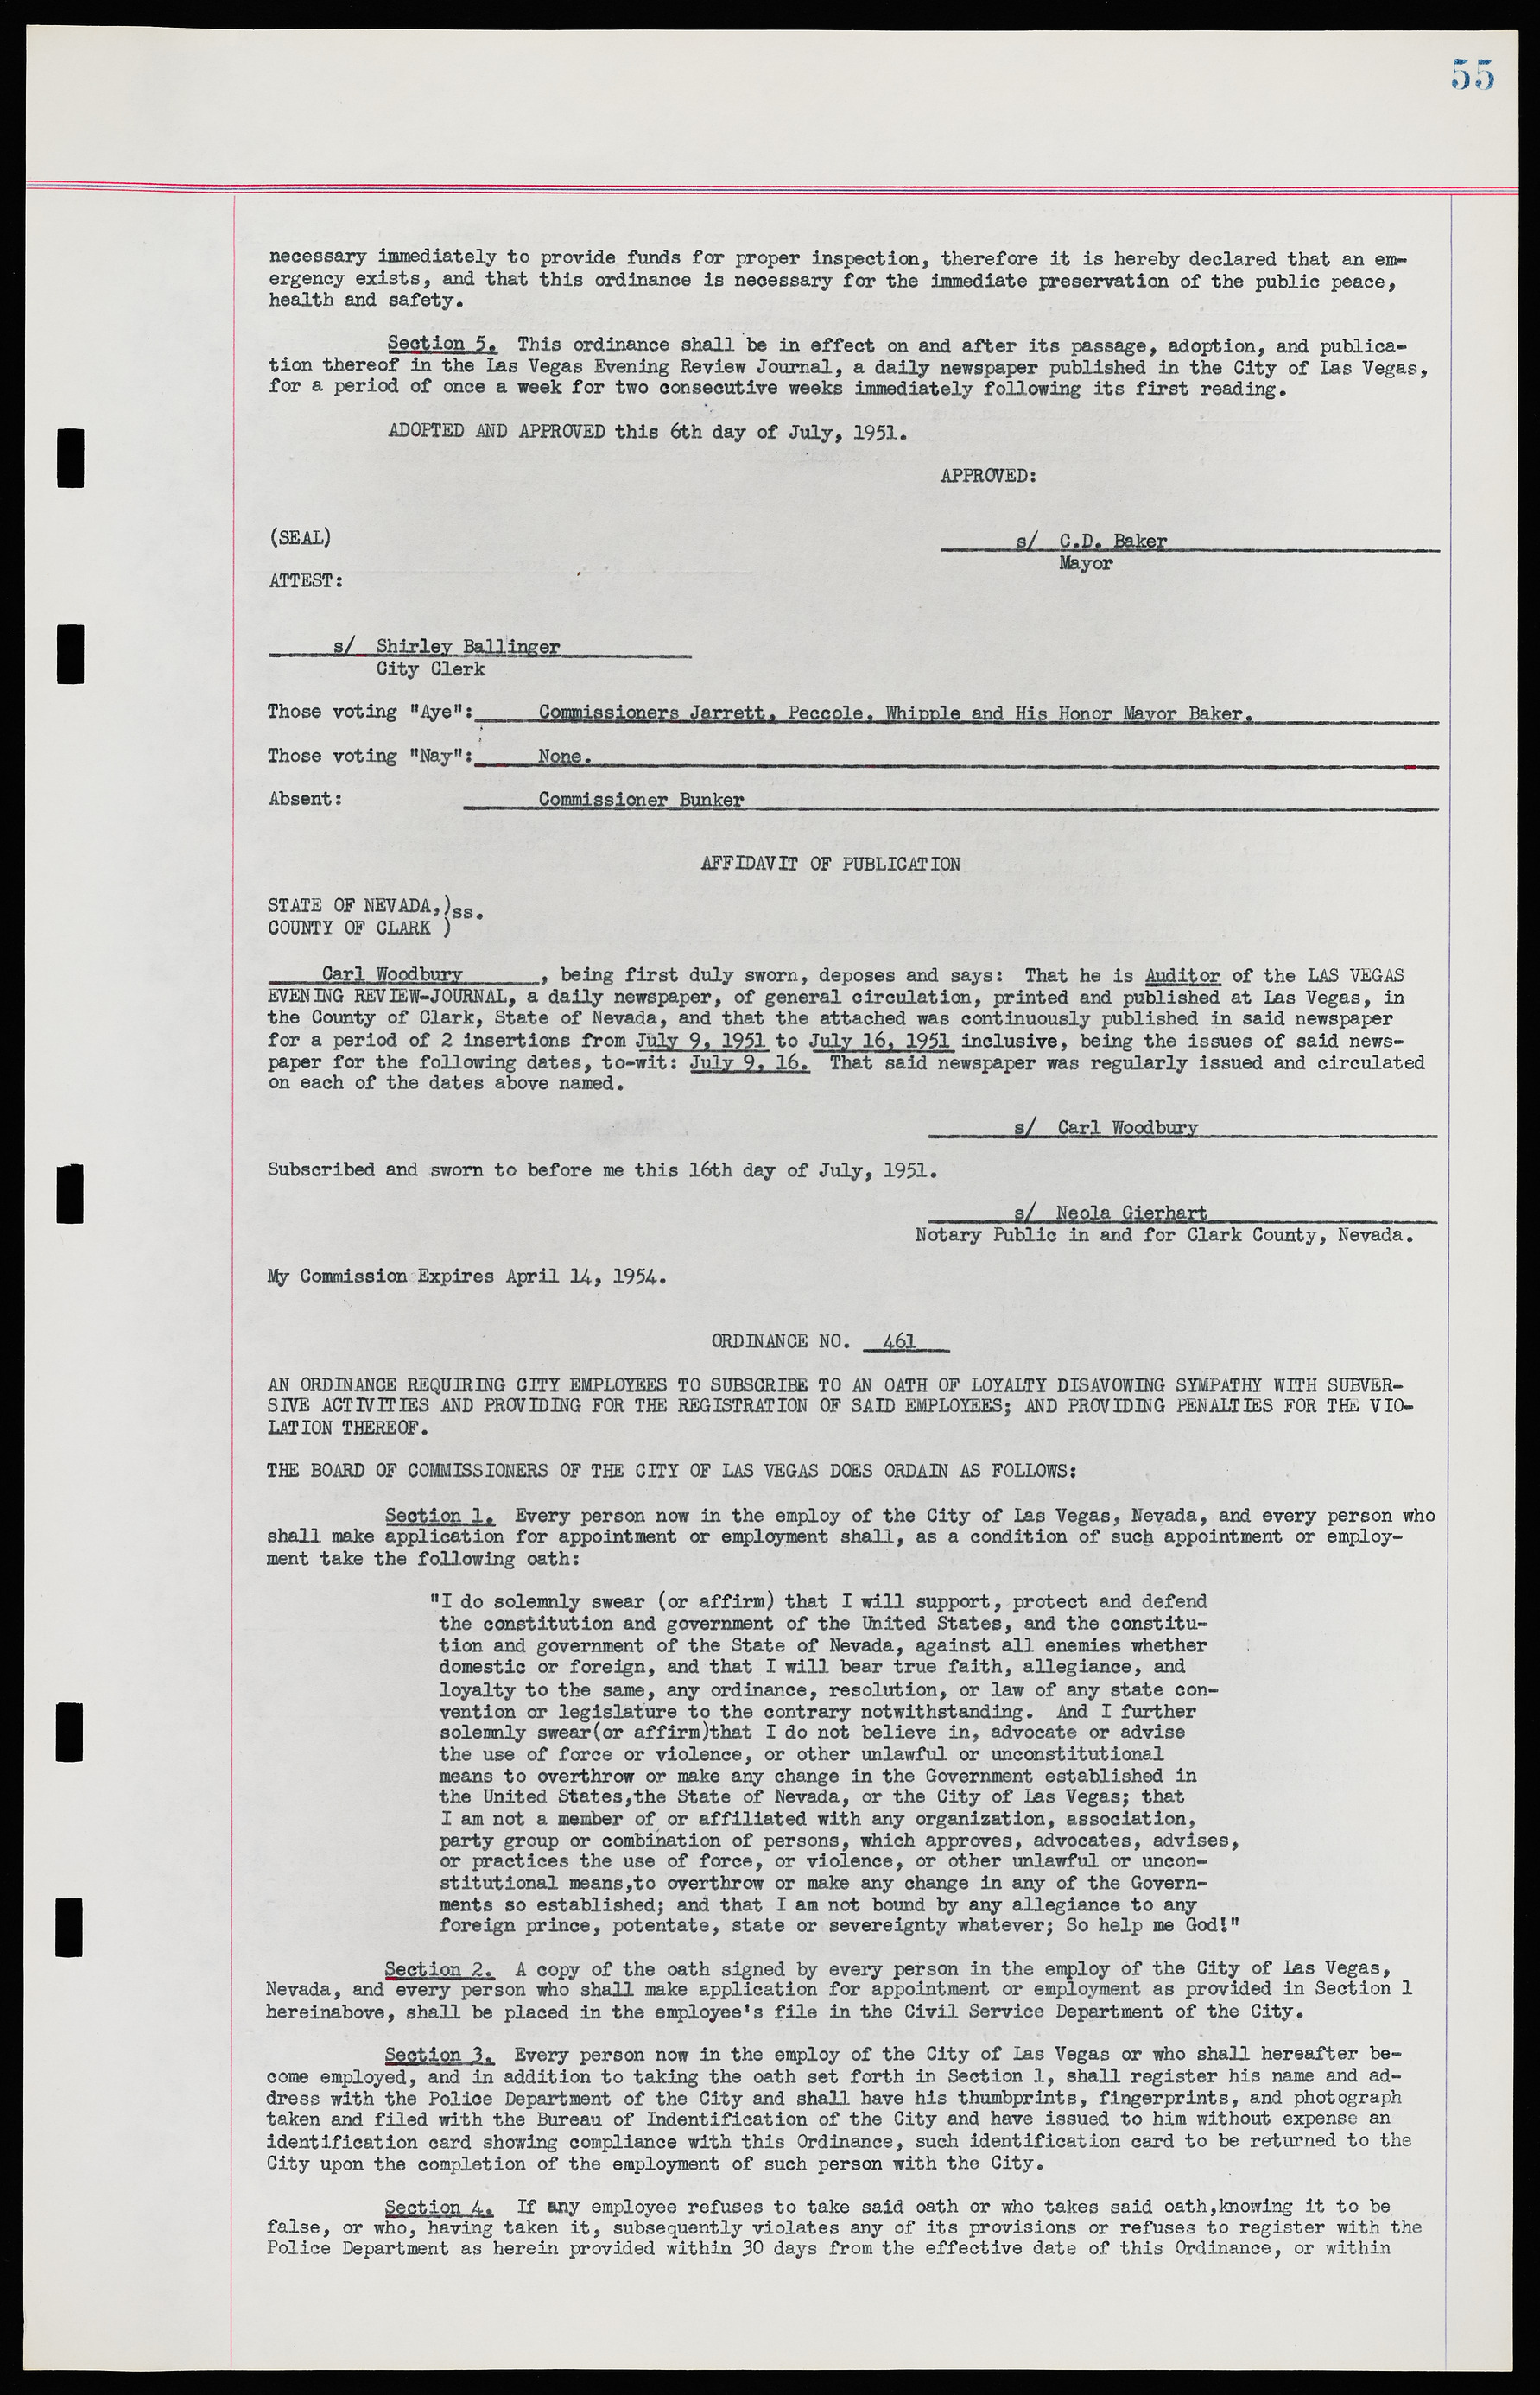 Las Vegas City Ordinances, November 13, 1950 to August 6, 1958, lvc000015-63